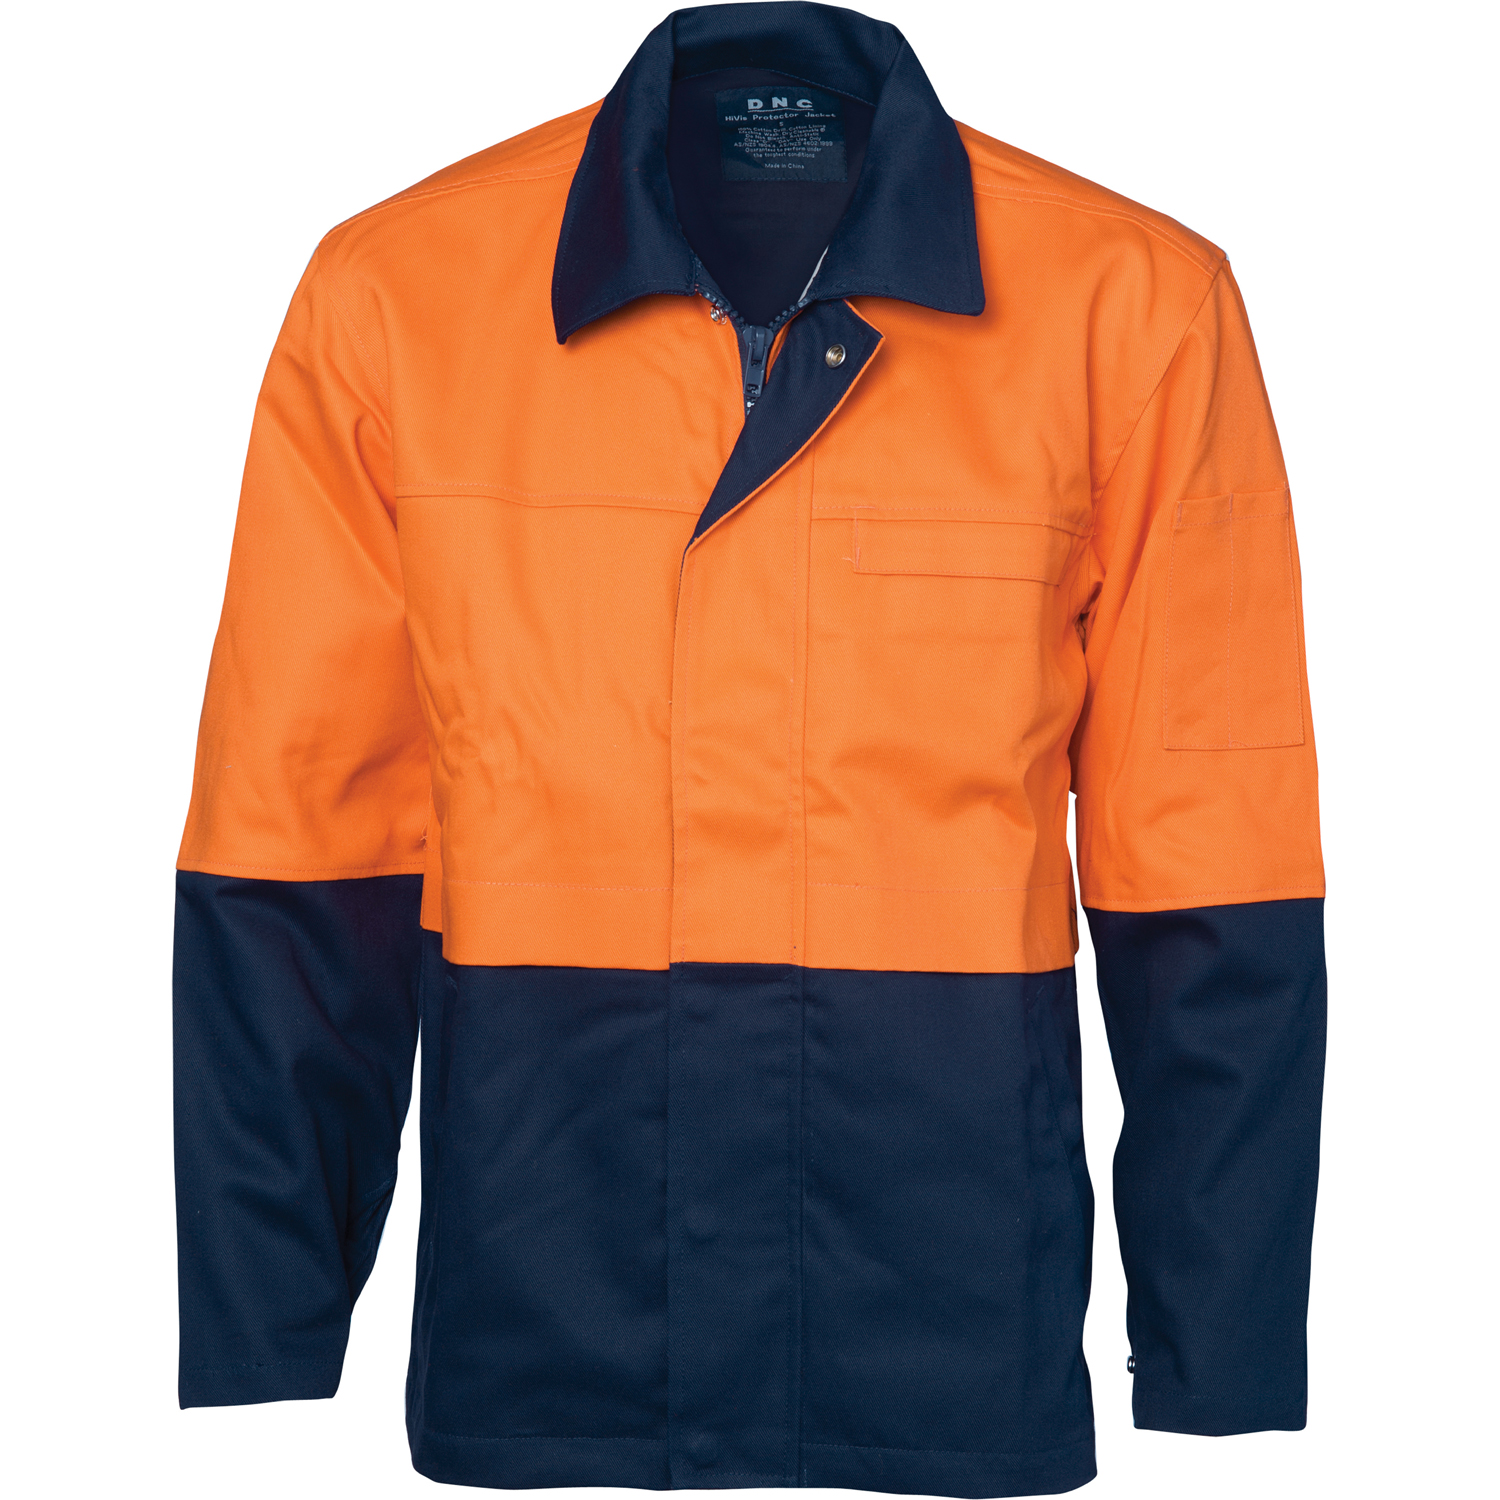 Welder Apron Welding Clothing Work Safety Gear Fire Flame Resistant Orange 